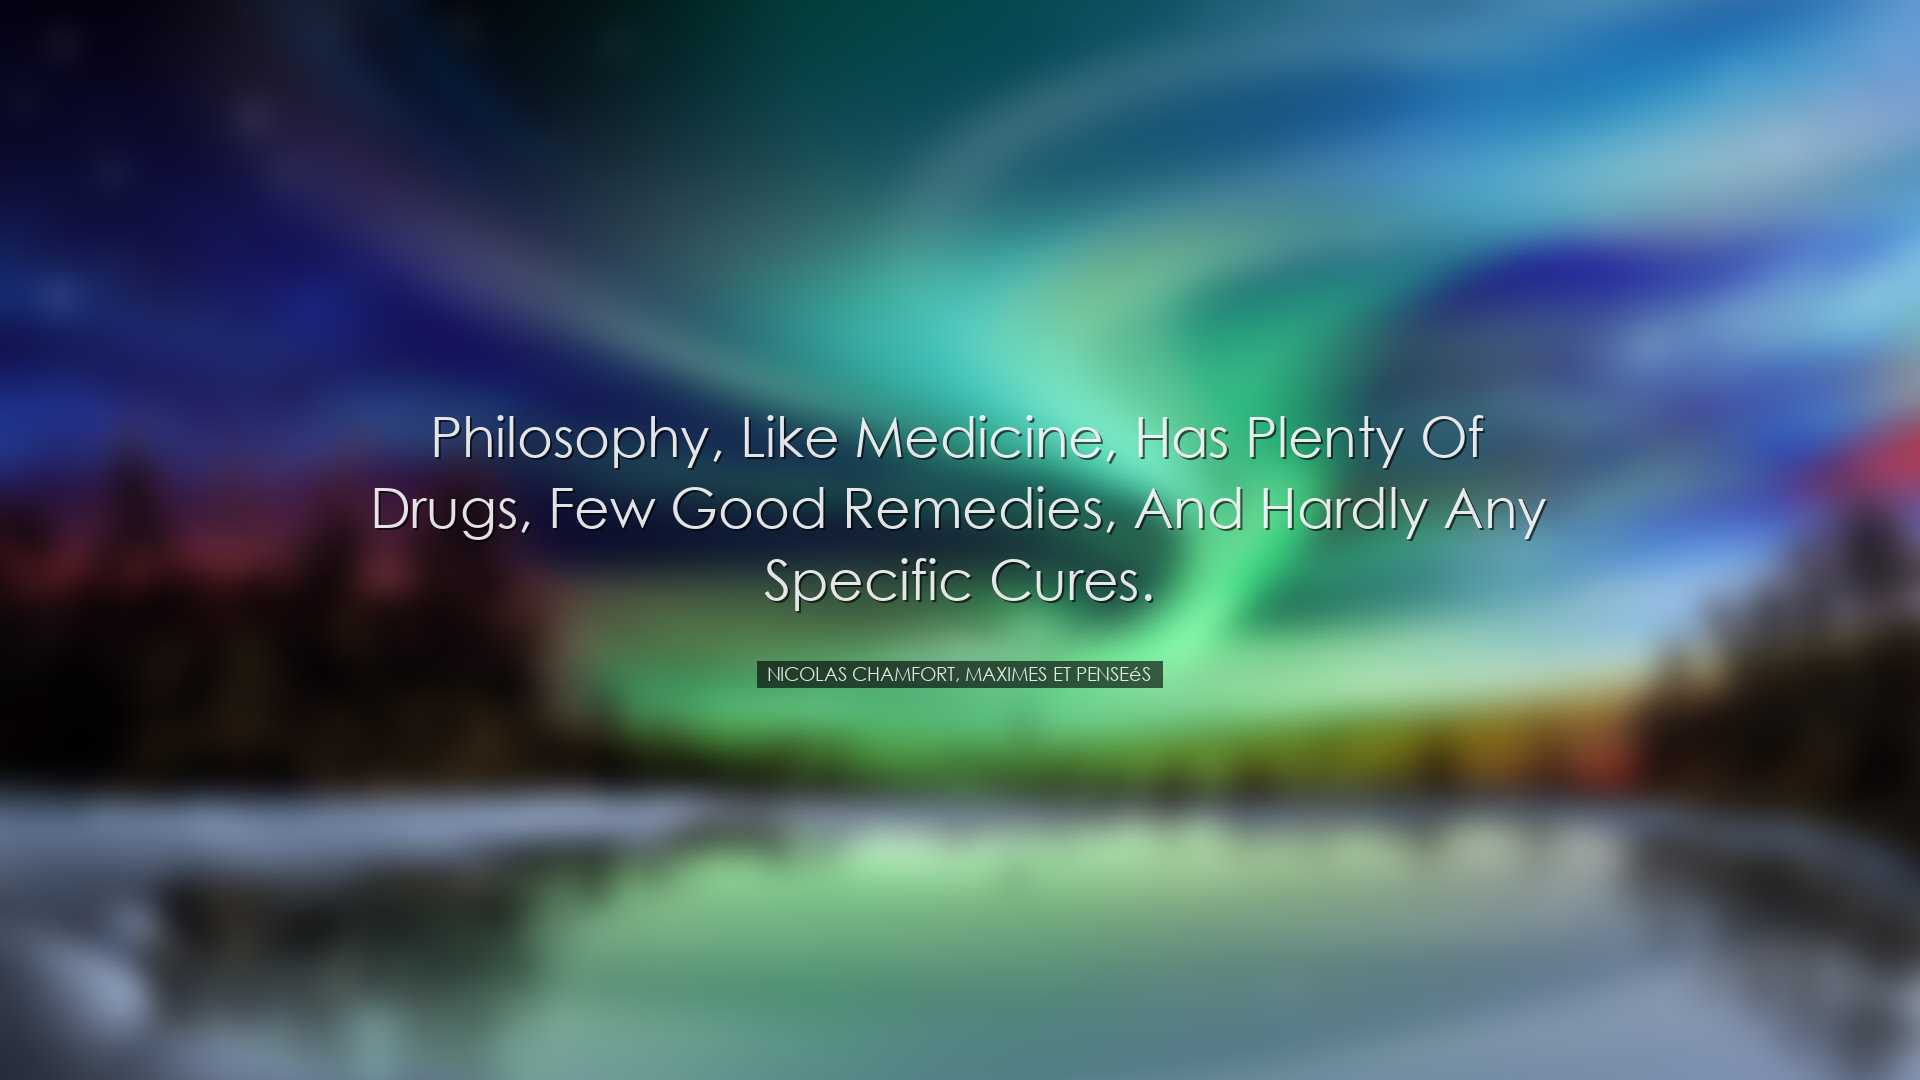 Philosophy, like medicine, has plenty of drugs, few good remedies,